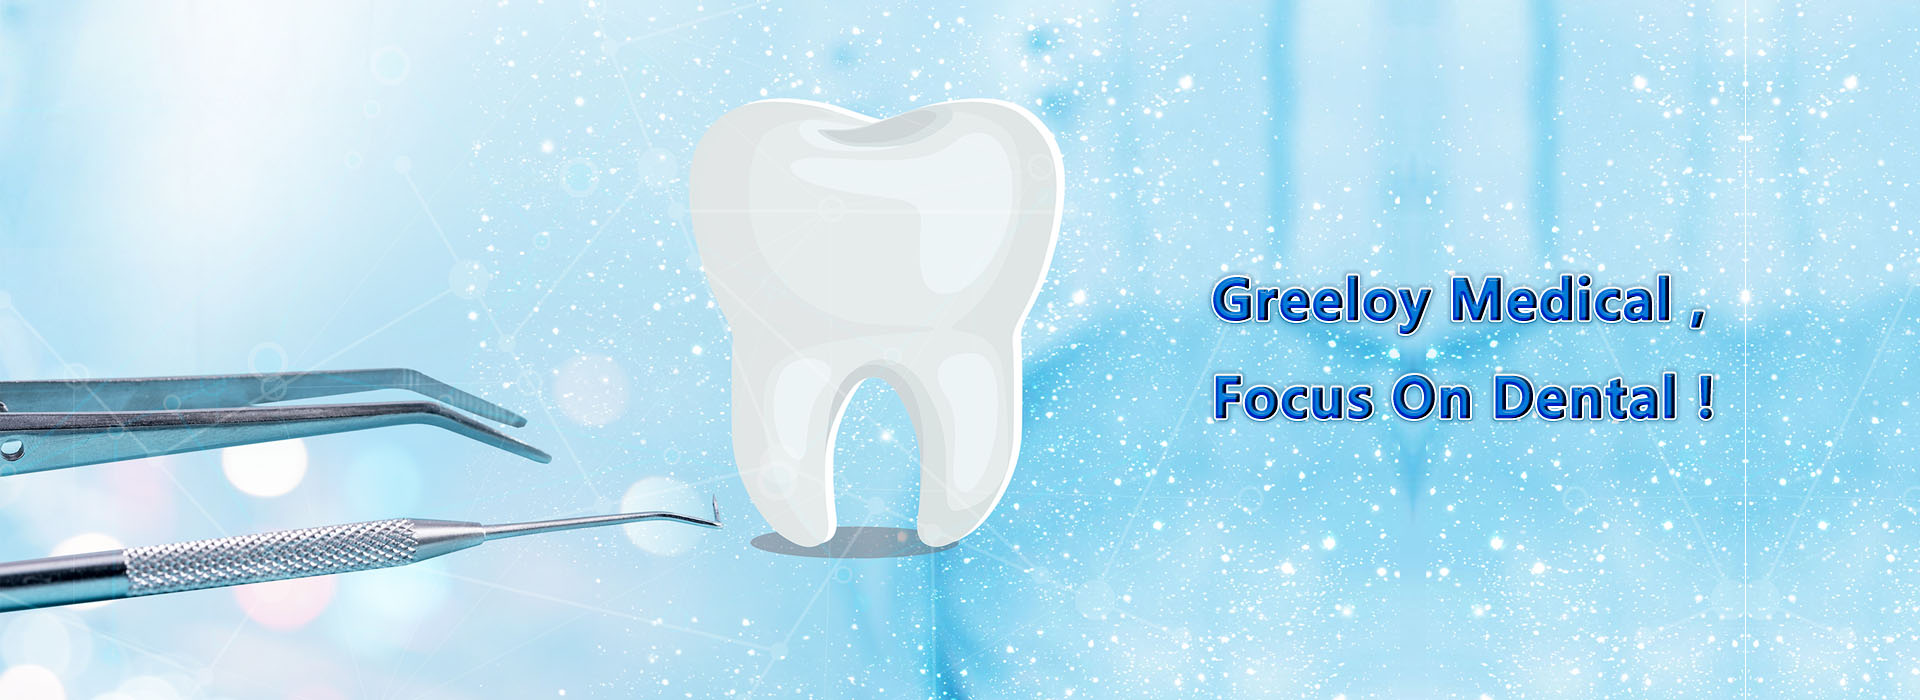 Greeloy Medical ，Focus on Dental!